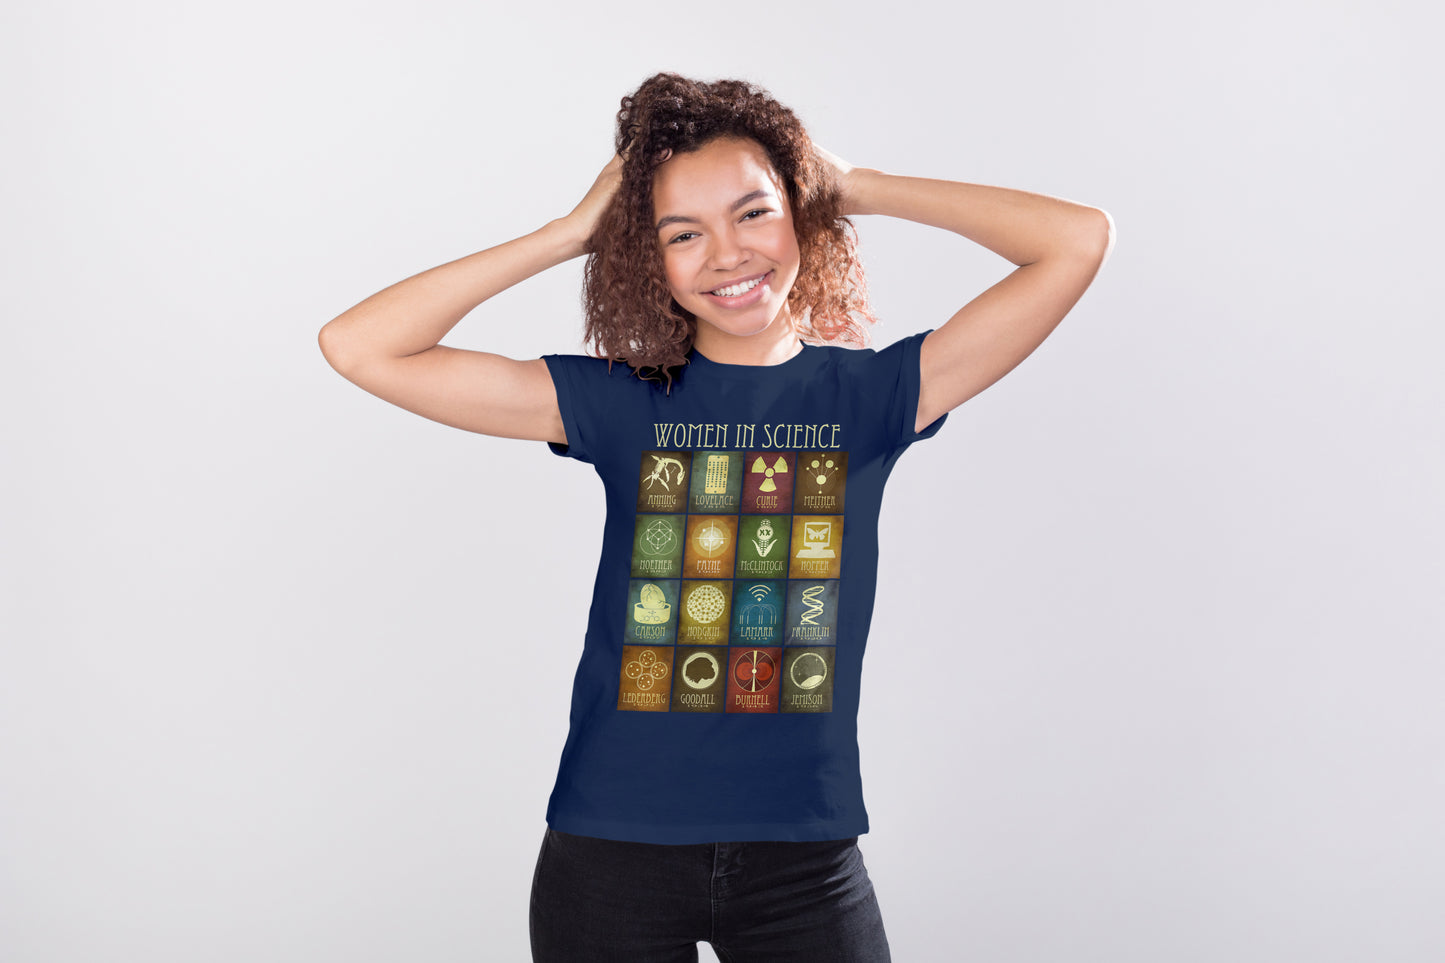 Women in Science T-shirt, 16 Historical STEM Figures